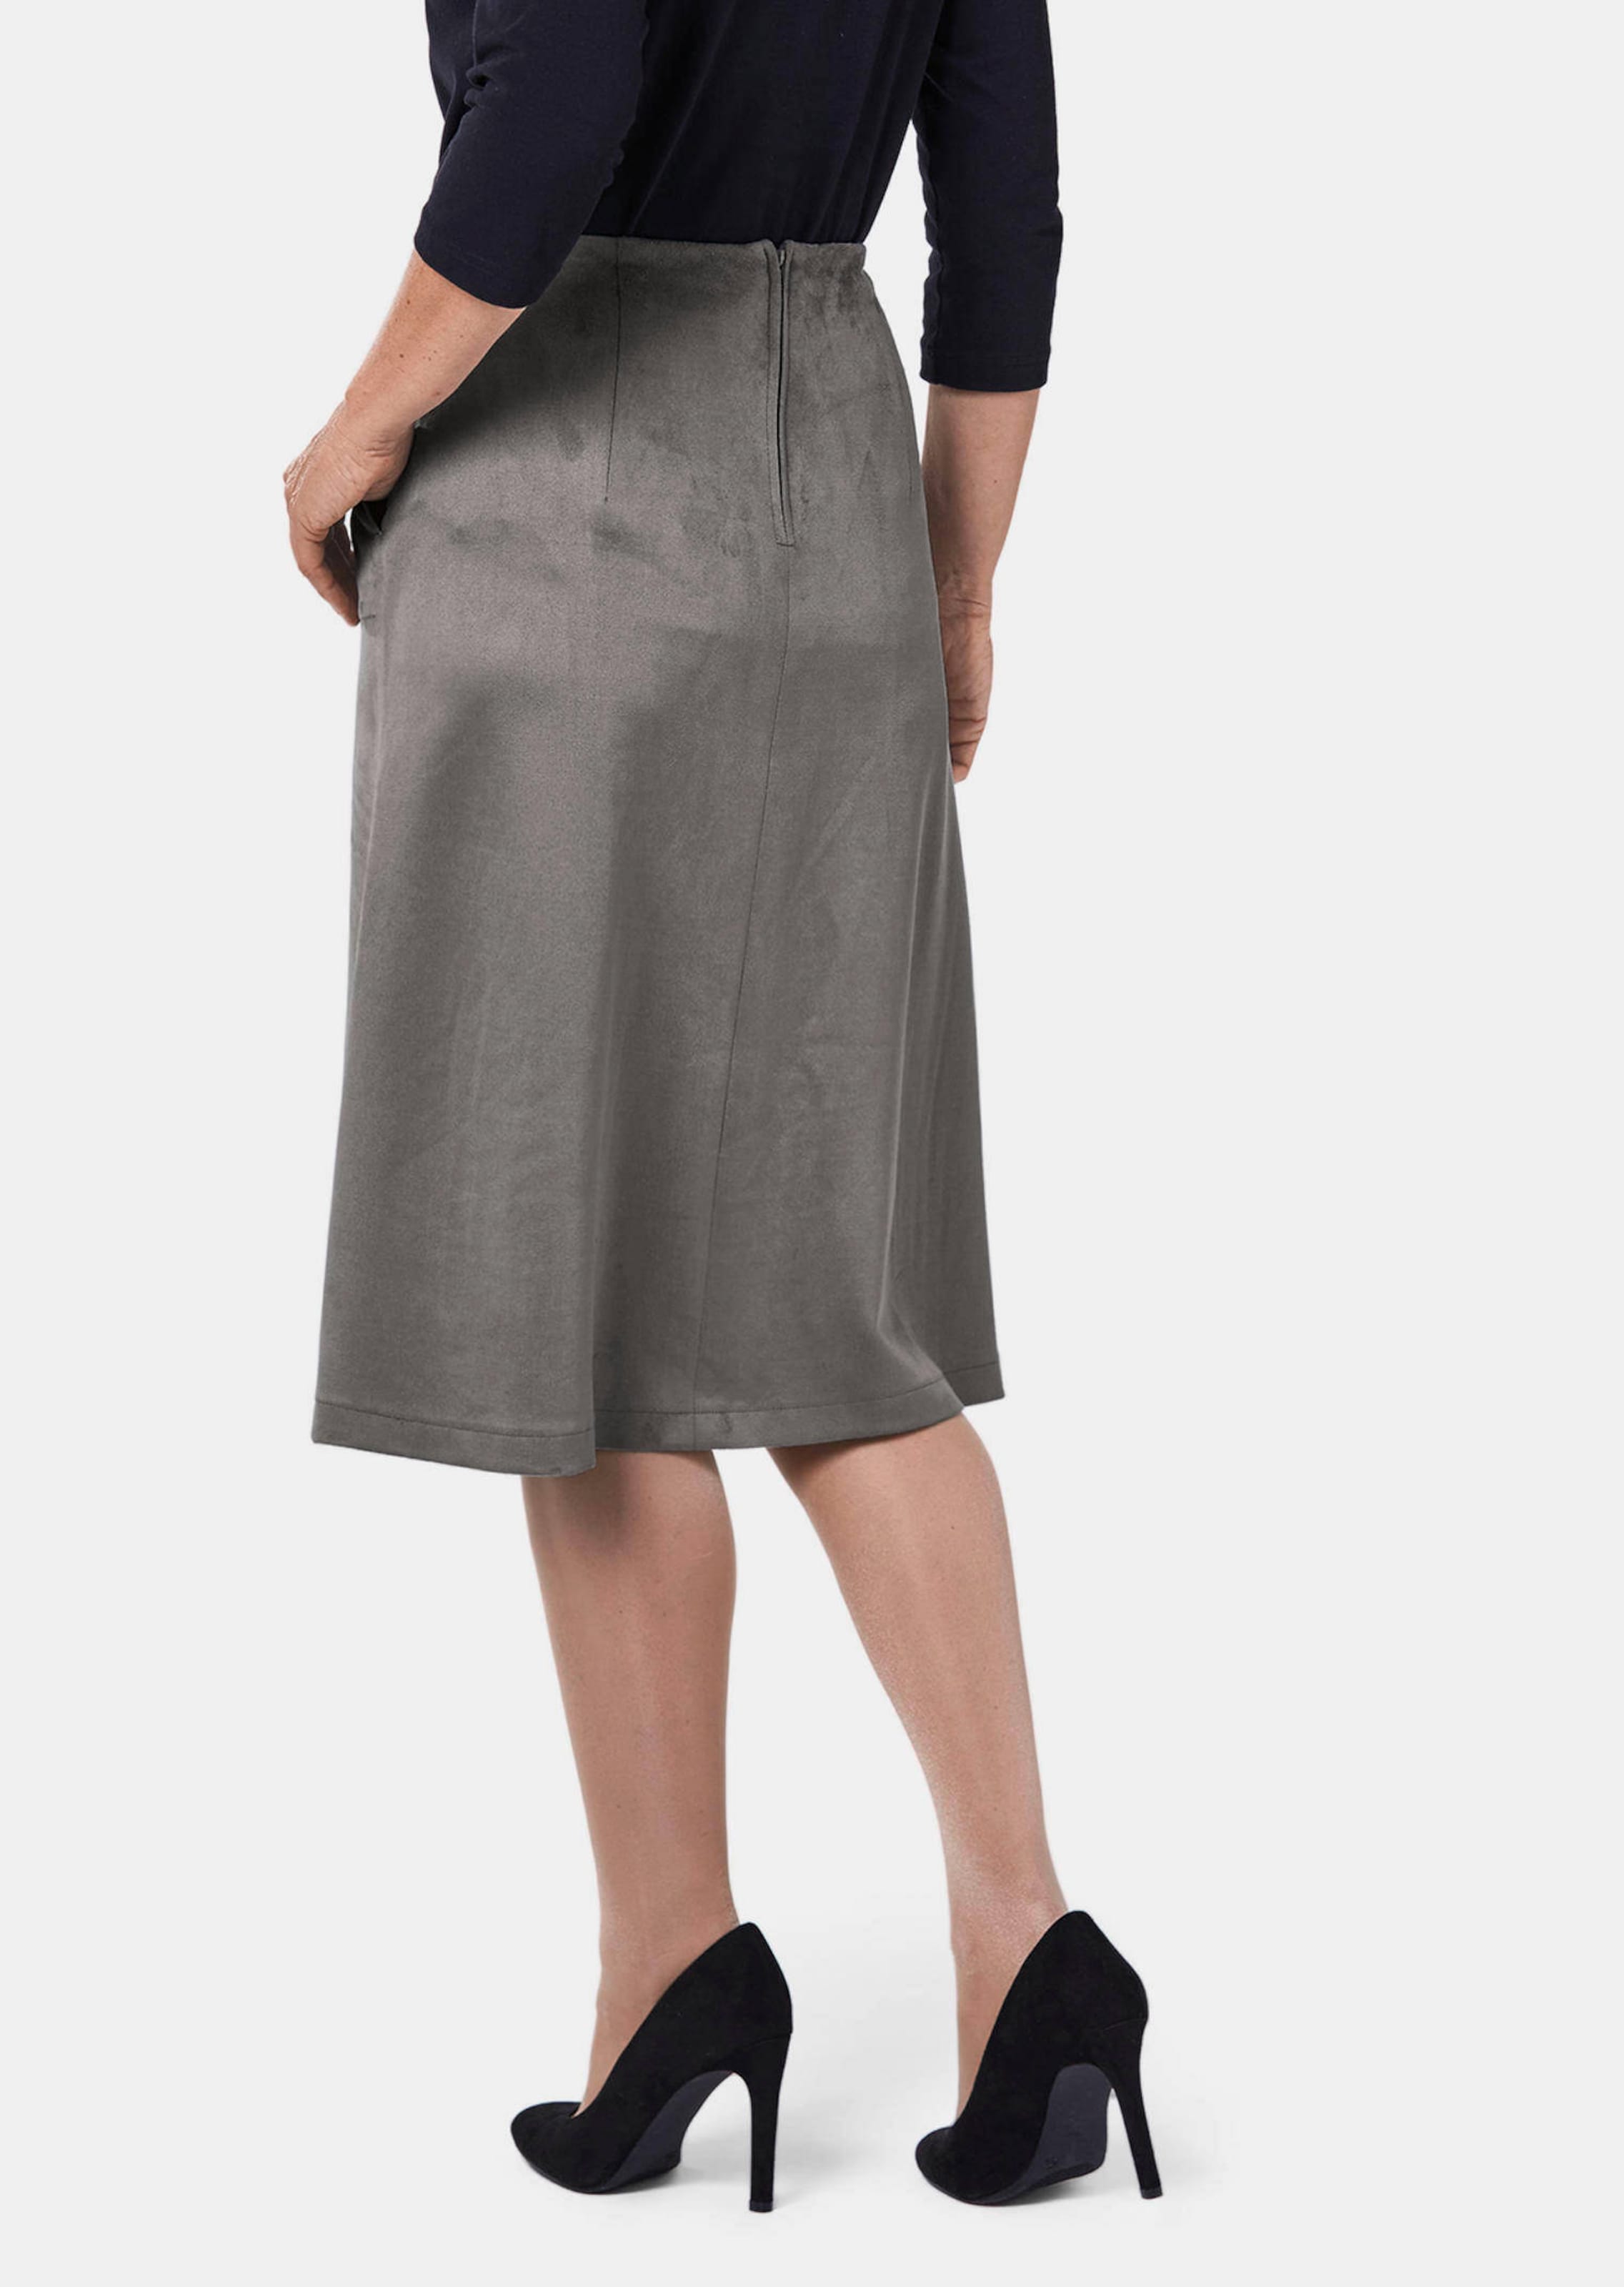 Jupe aspect velours - gris - Gr. 48 de Goldner Fashion